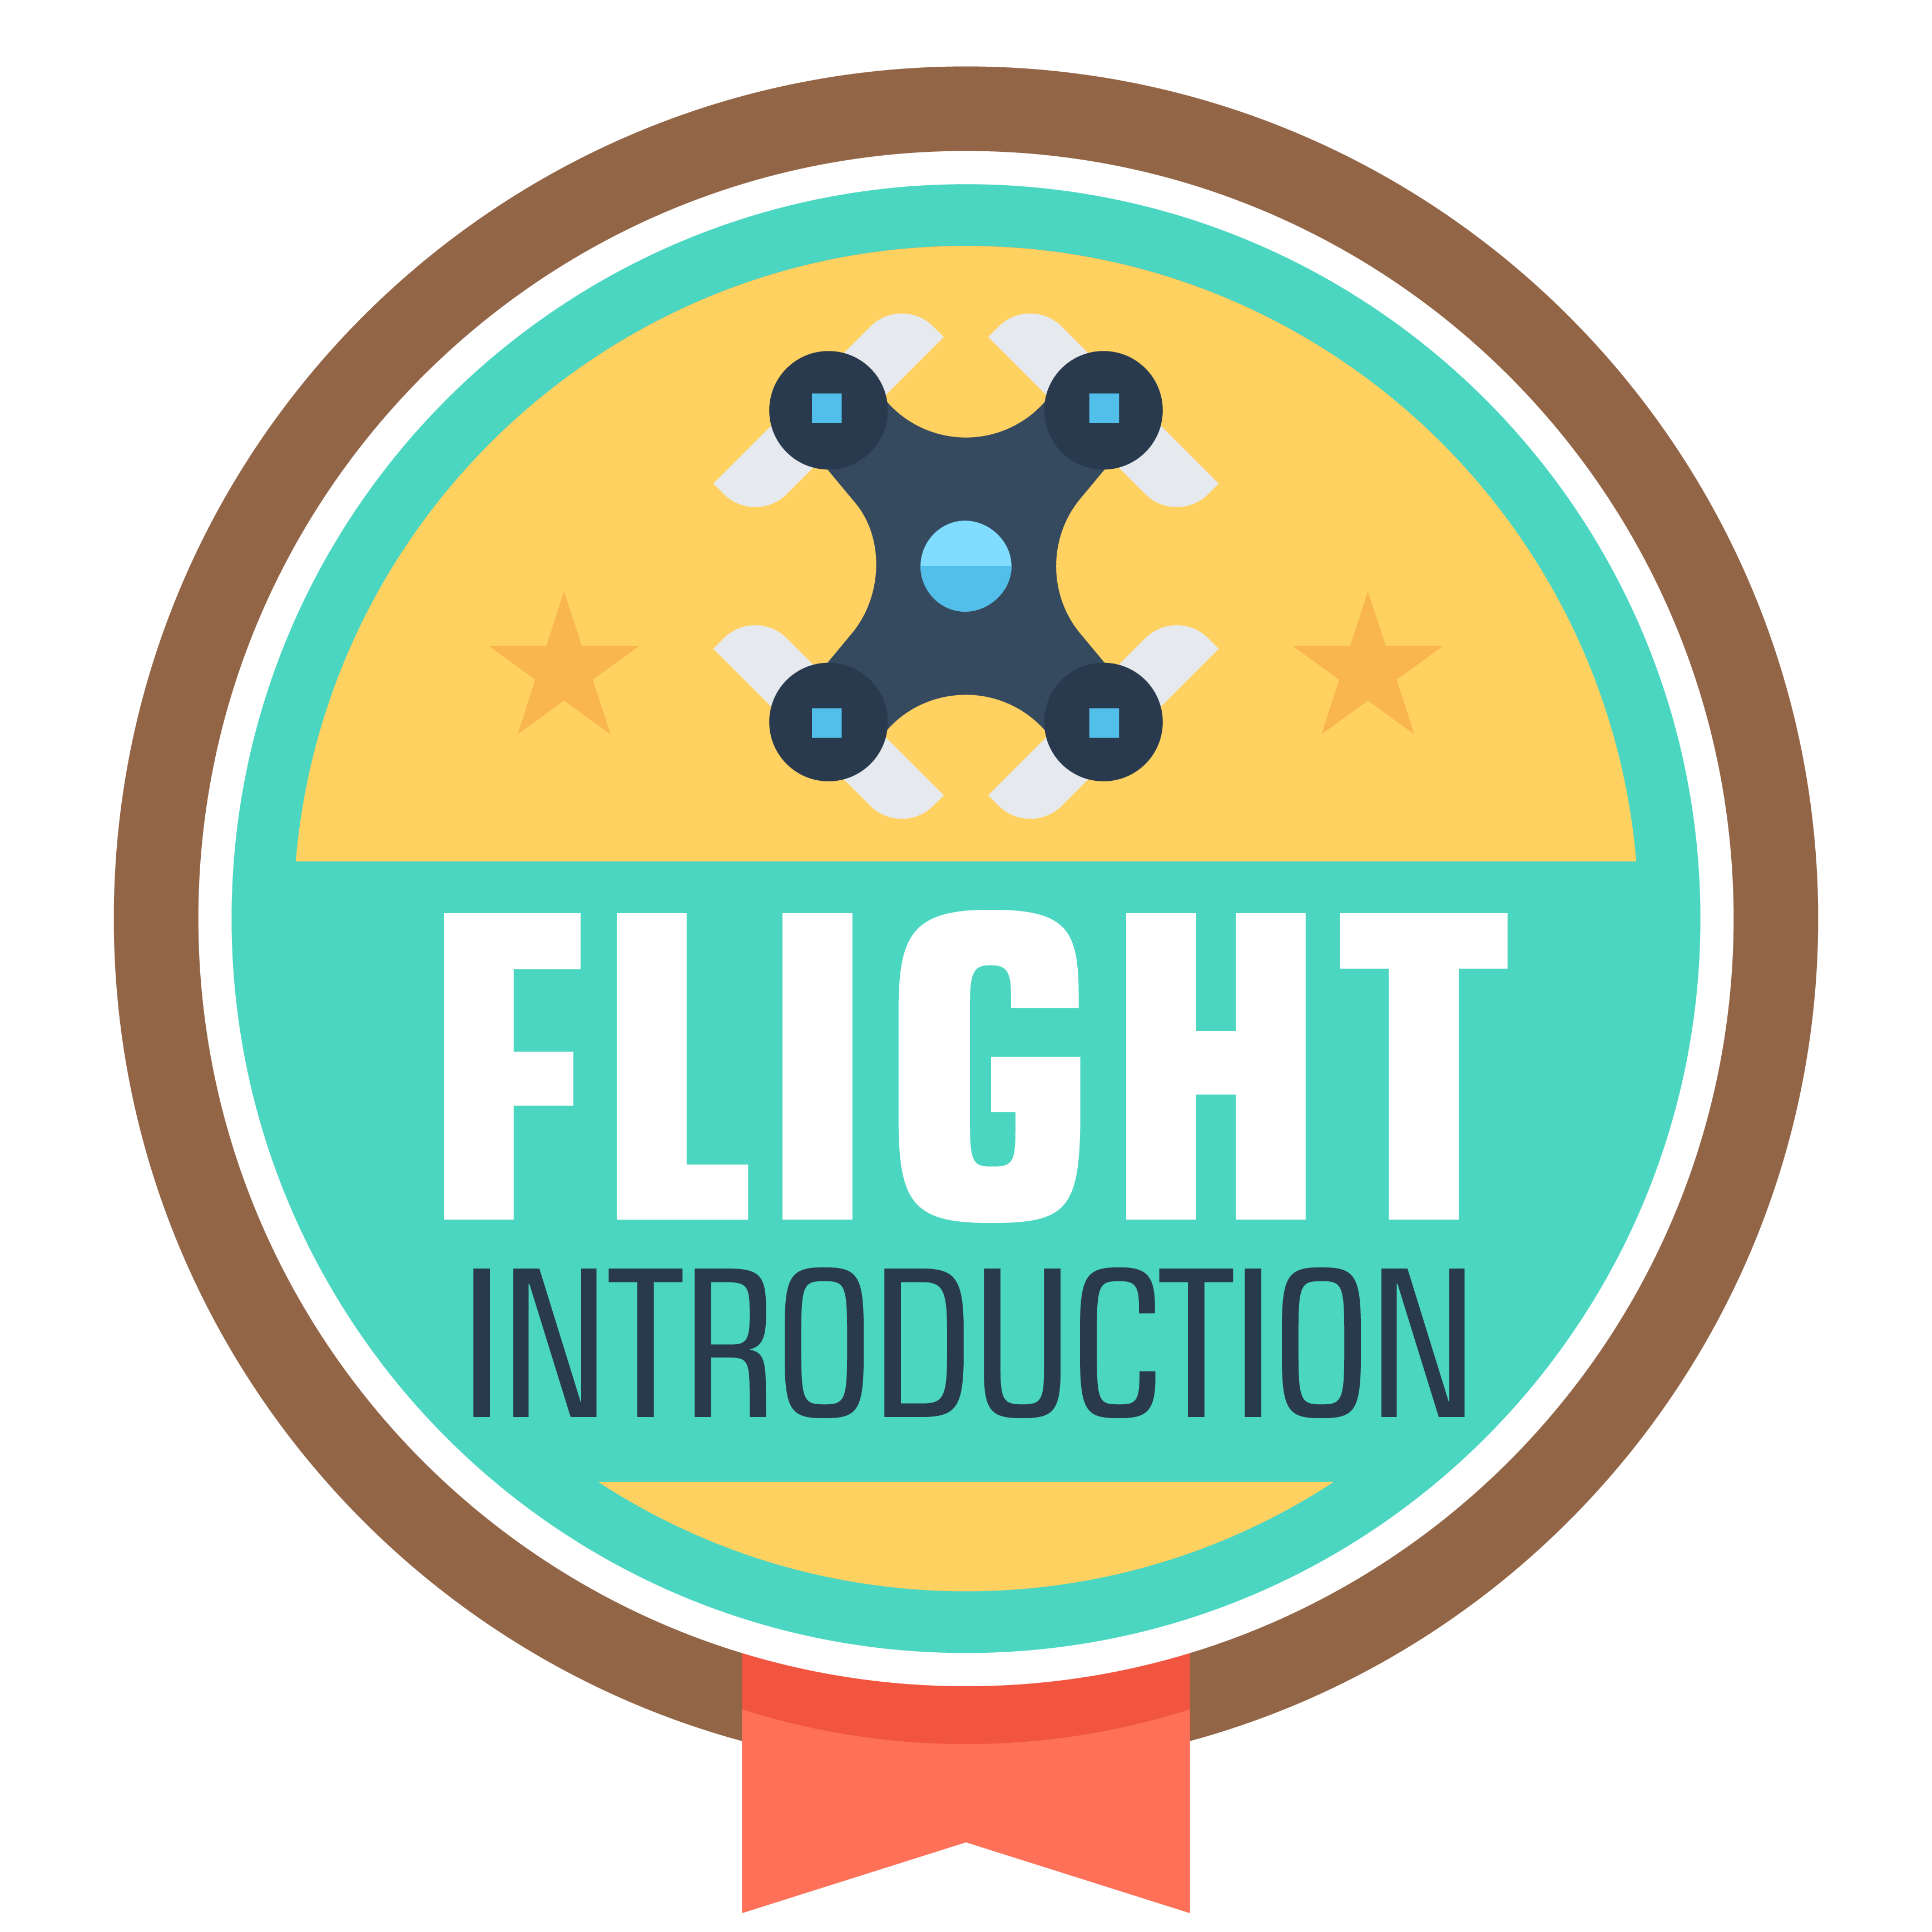 Flight Introduction